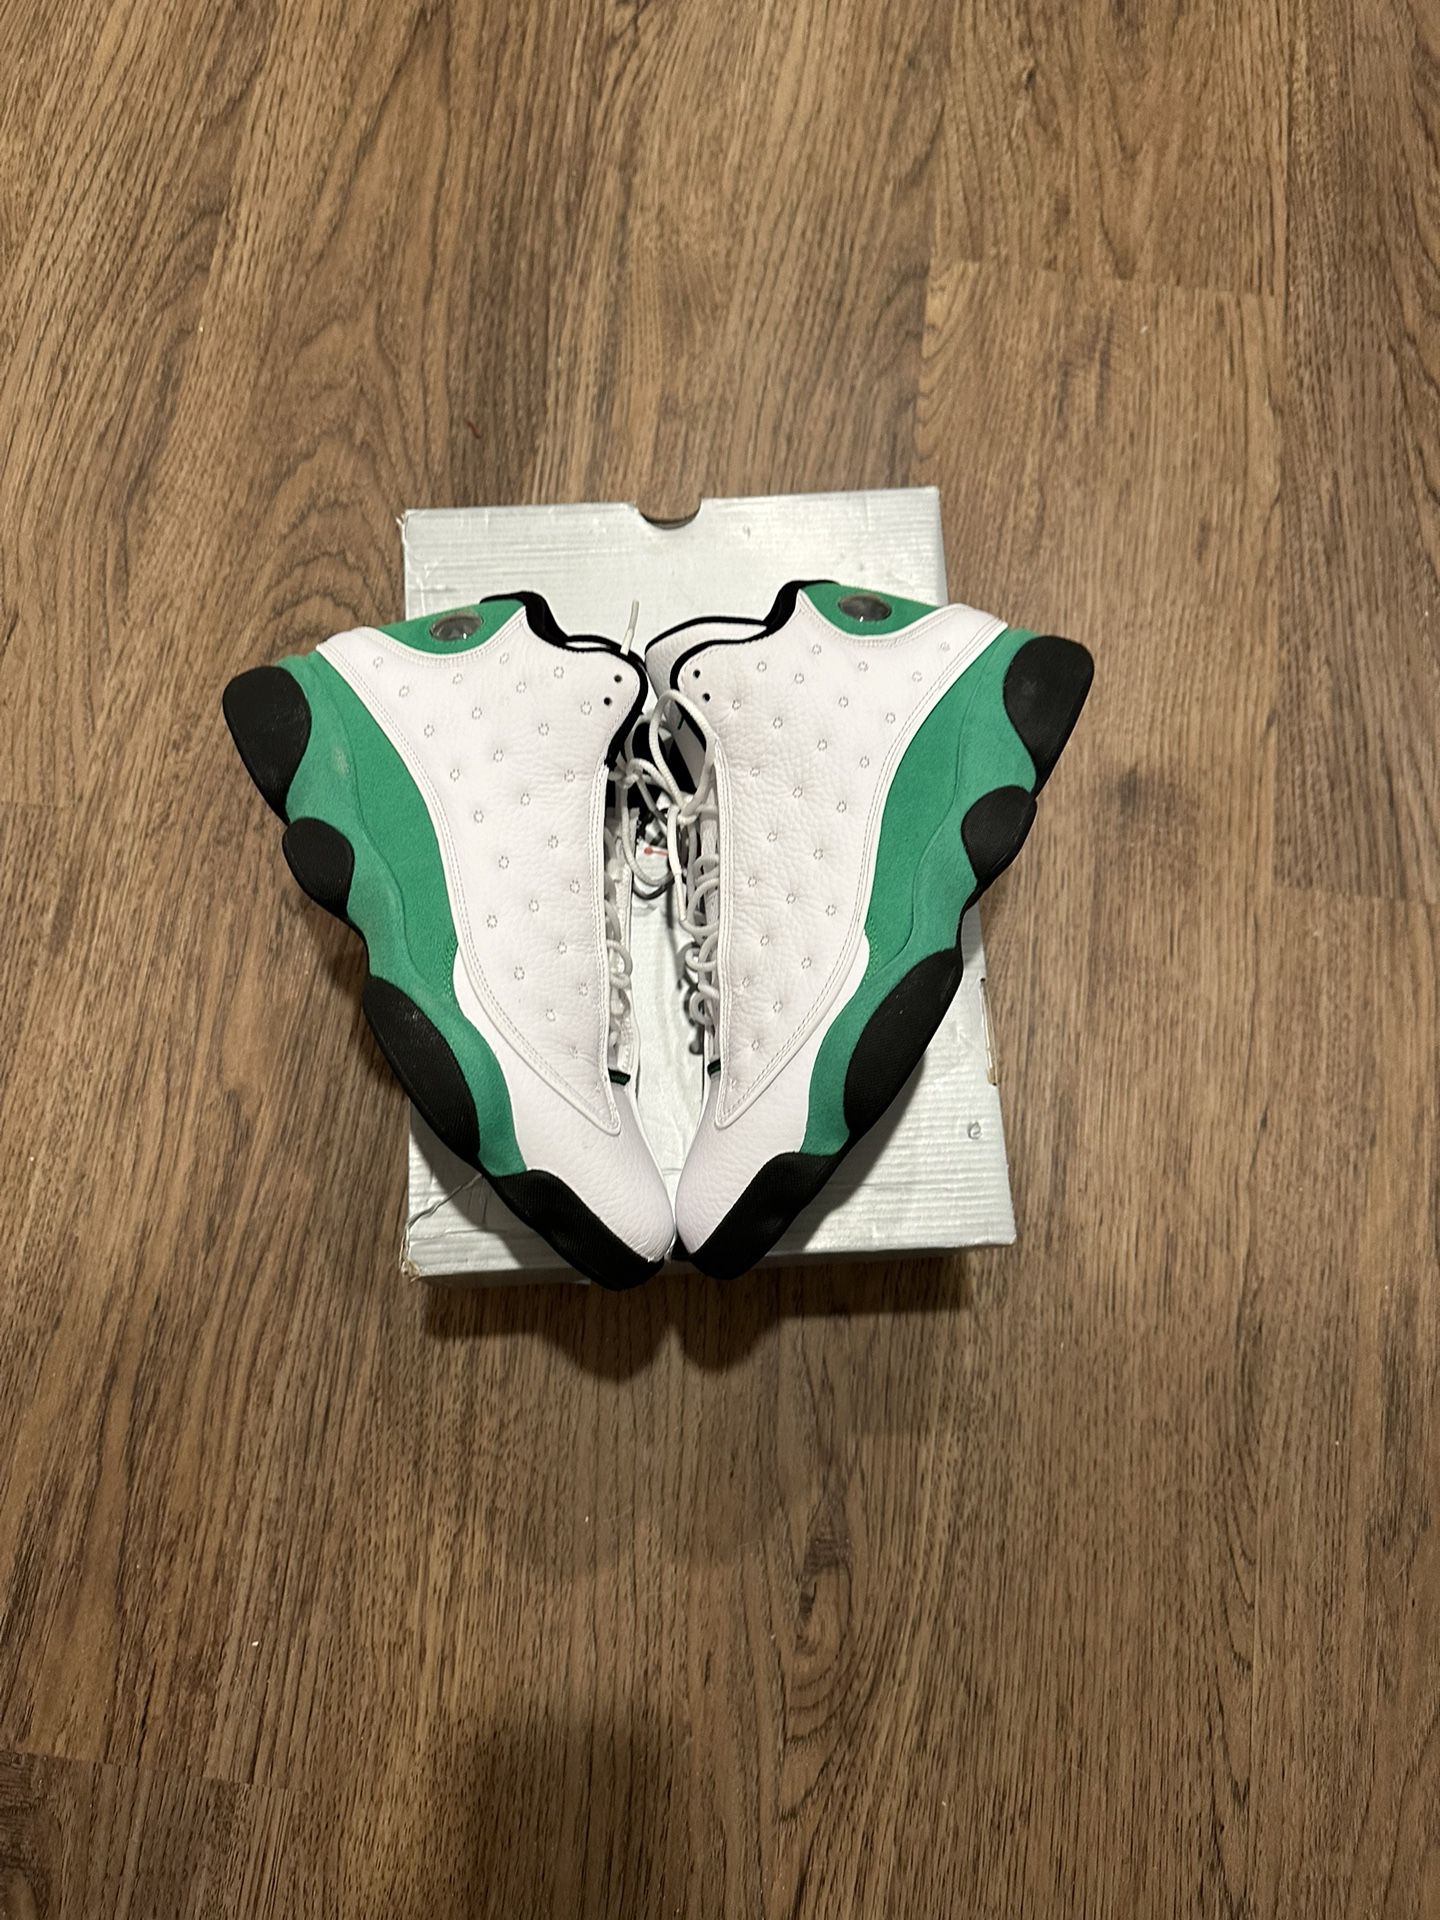 Jordan 13 Retro ‘White Lucky Green’ Size 12 Men’s Shoes 